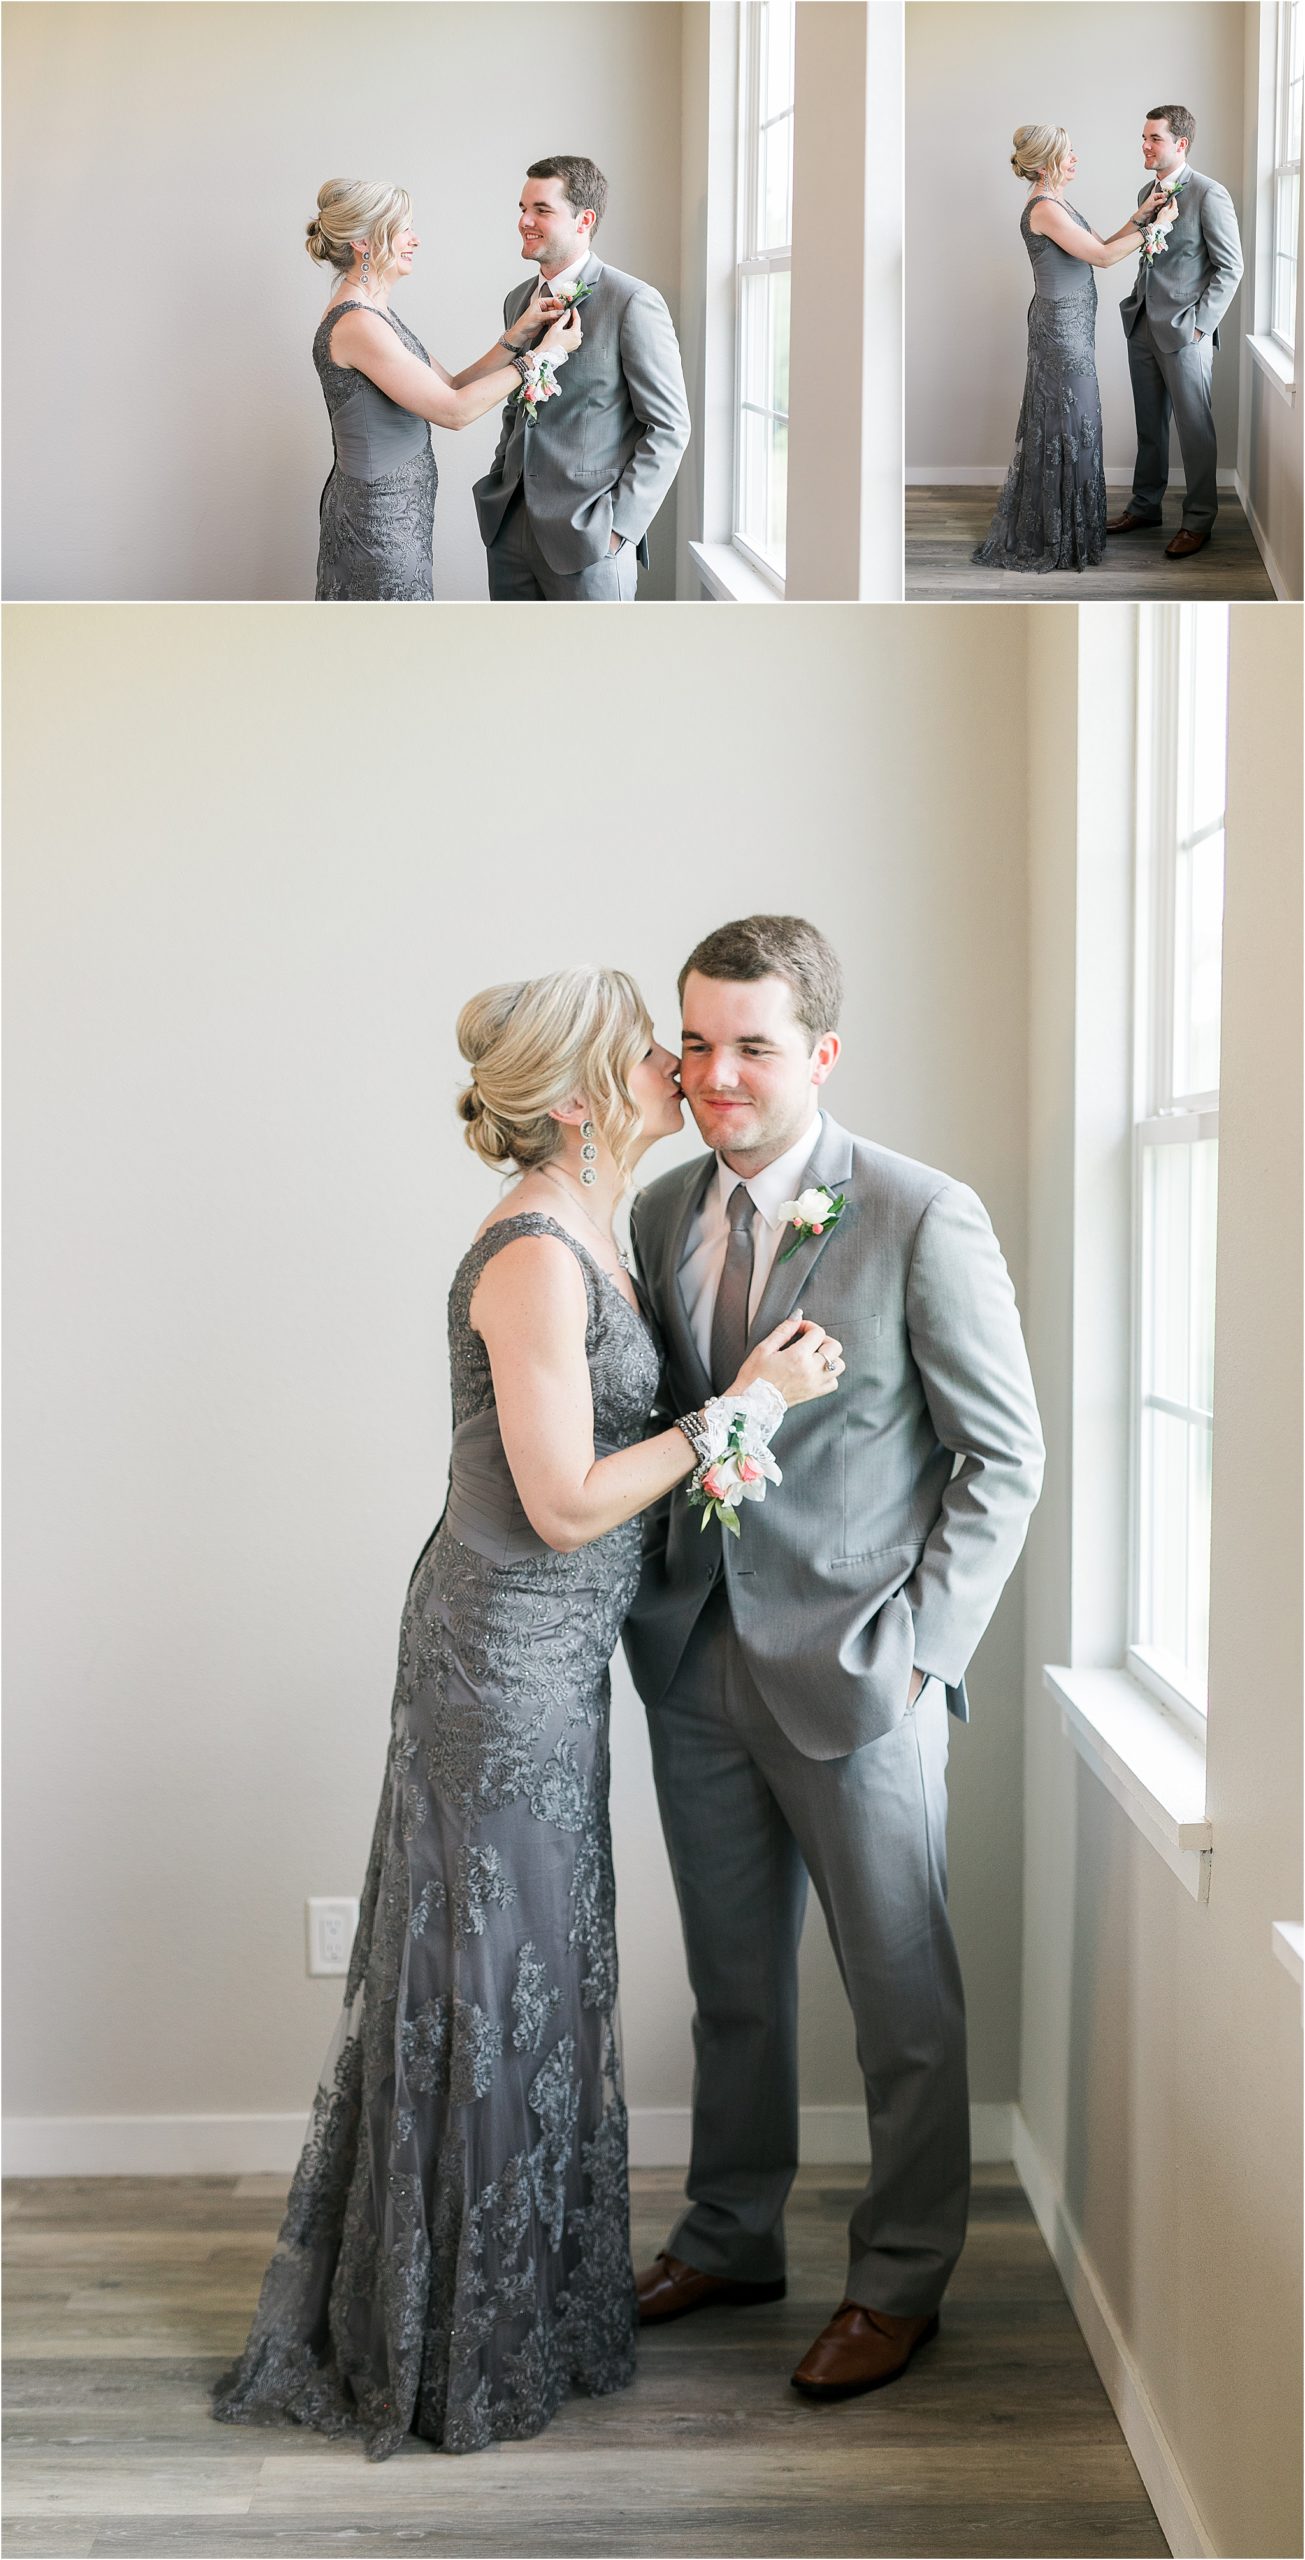 Wedding moments by DFW Wedding Photographer Jillian Hogan at The Grand Ivory in Leonard, Texas